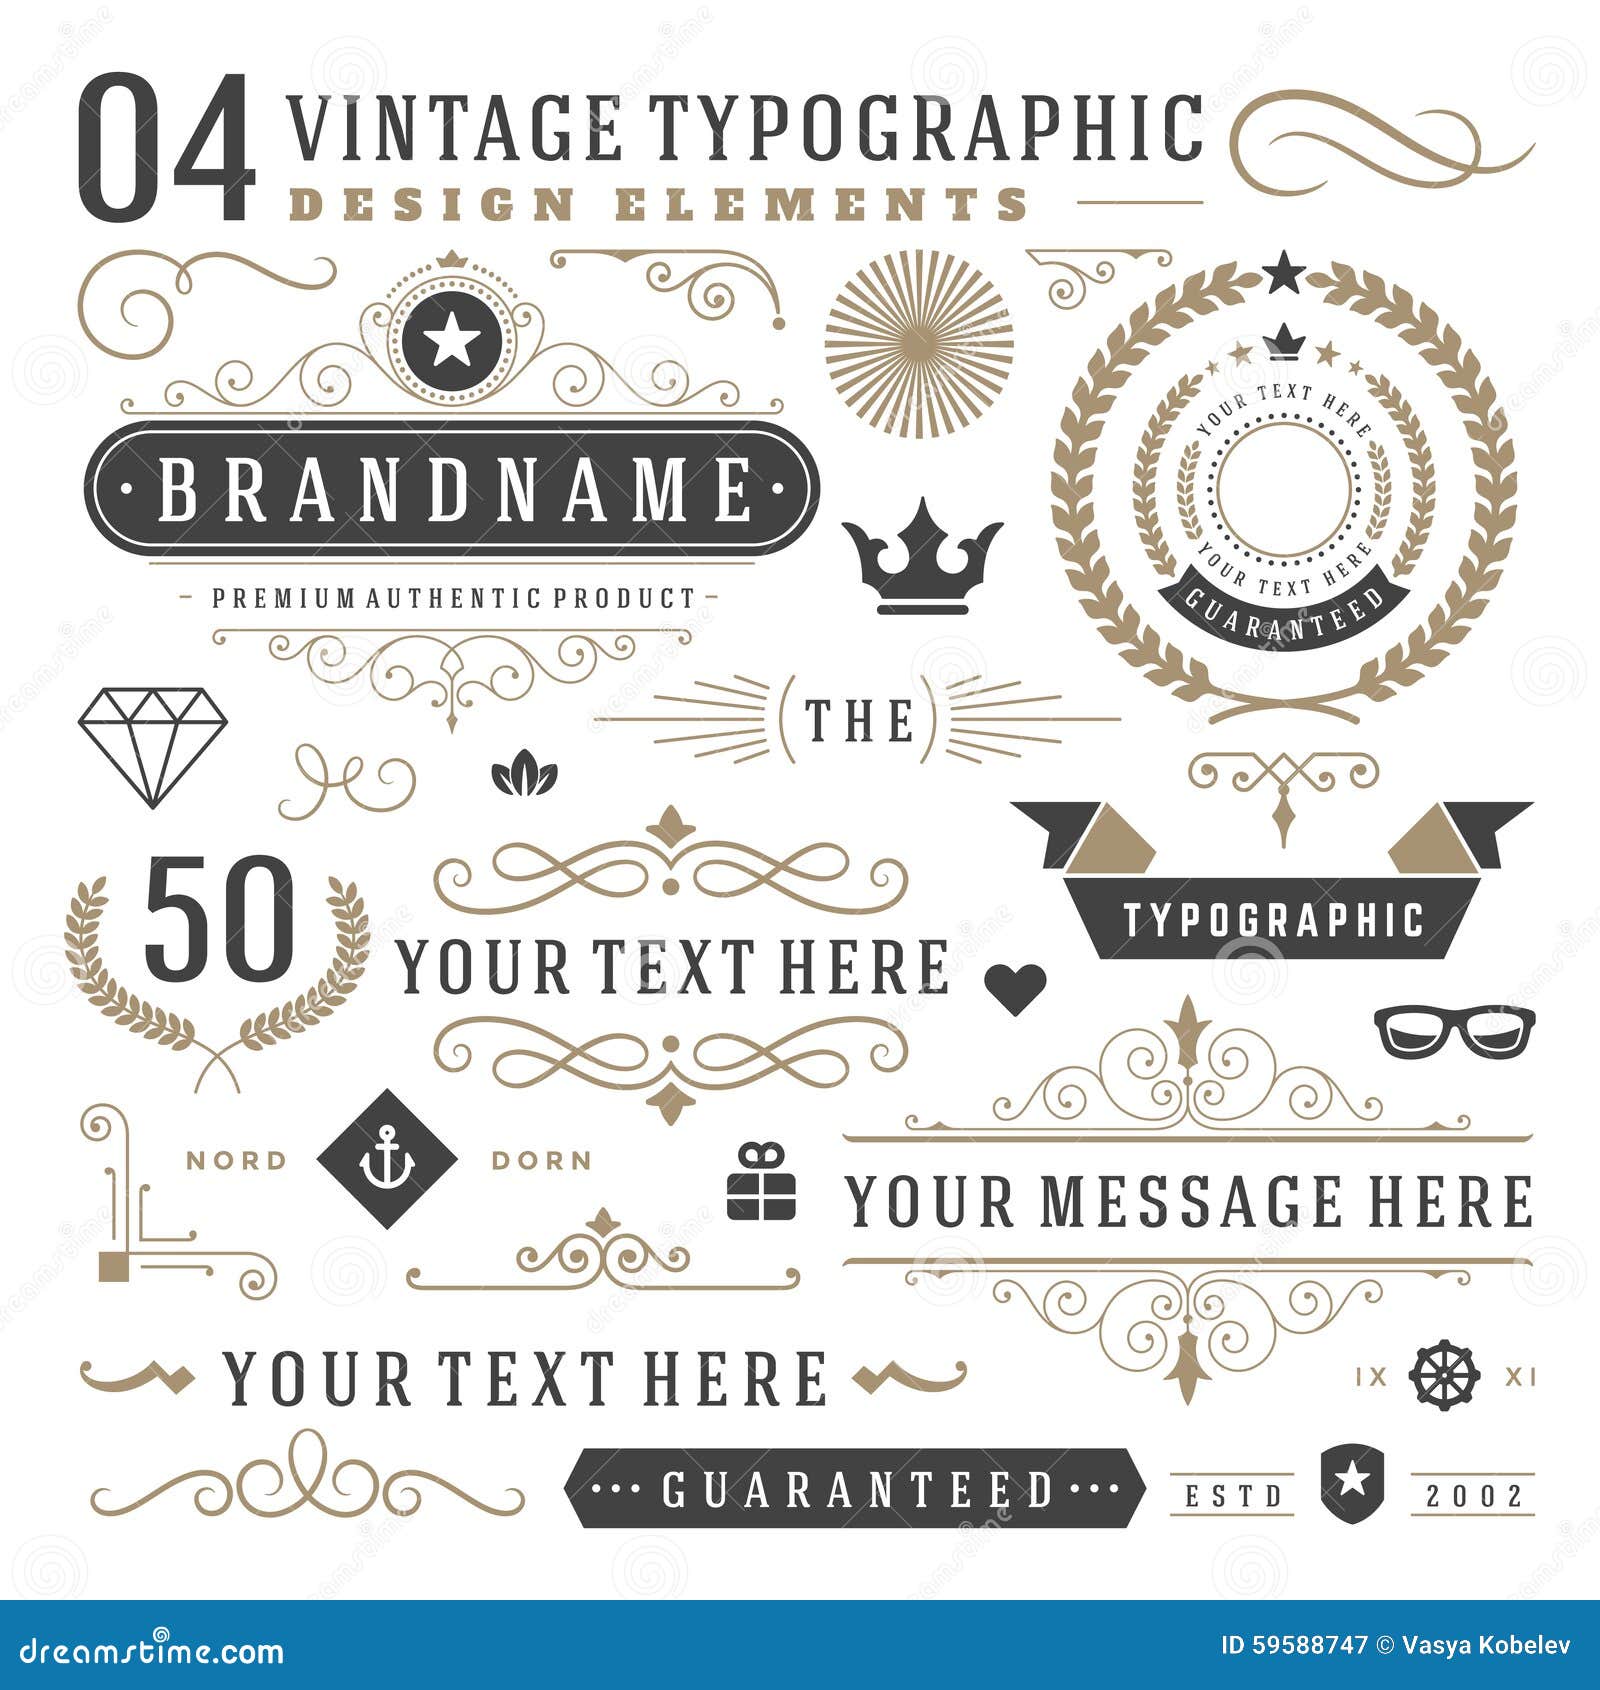 Download Retro Vintage Typographic Design Elements Stock Vector ...